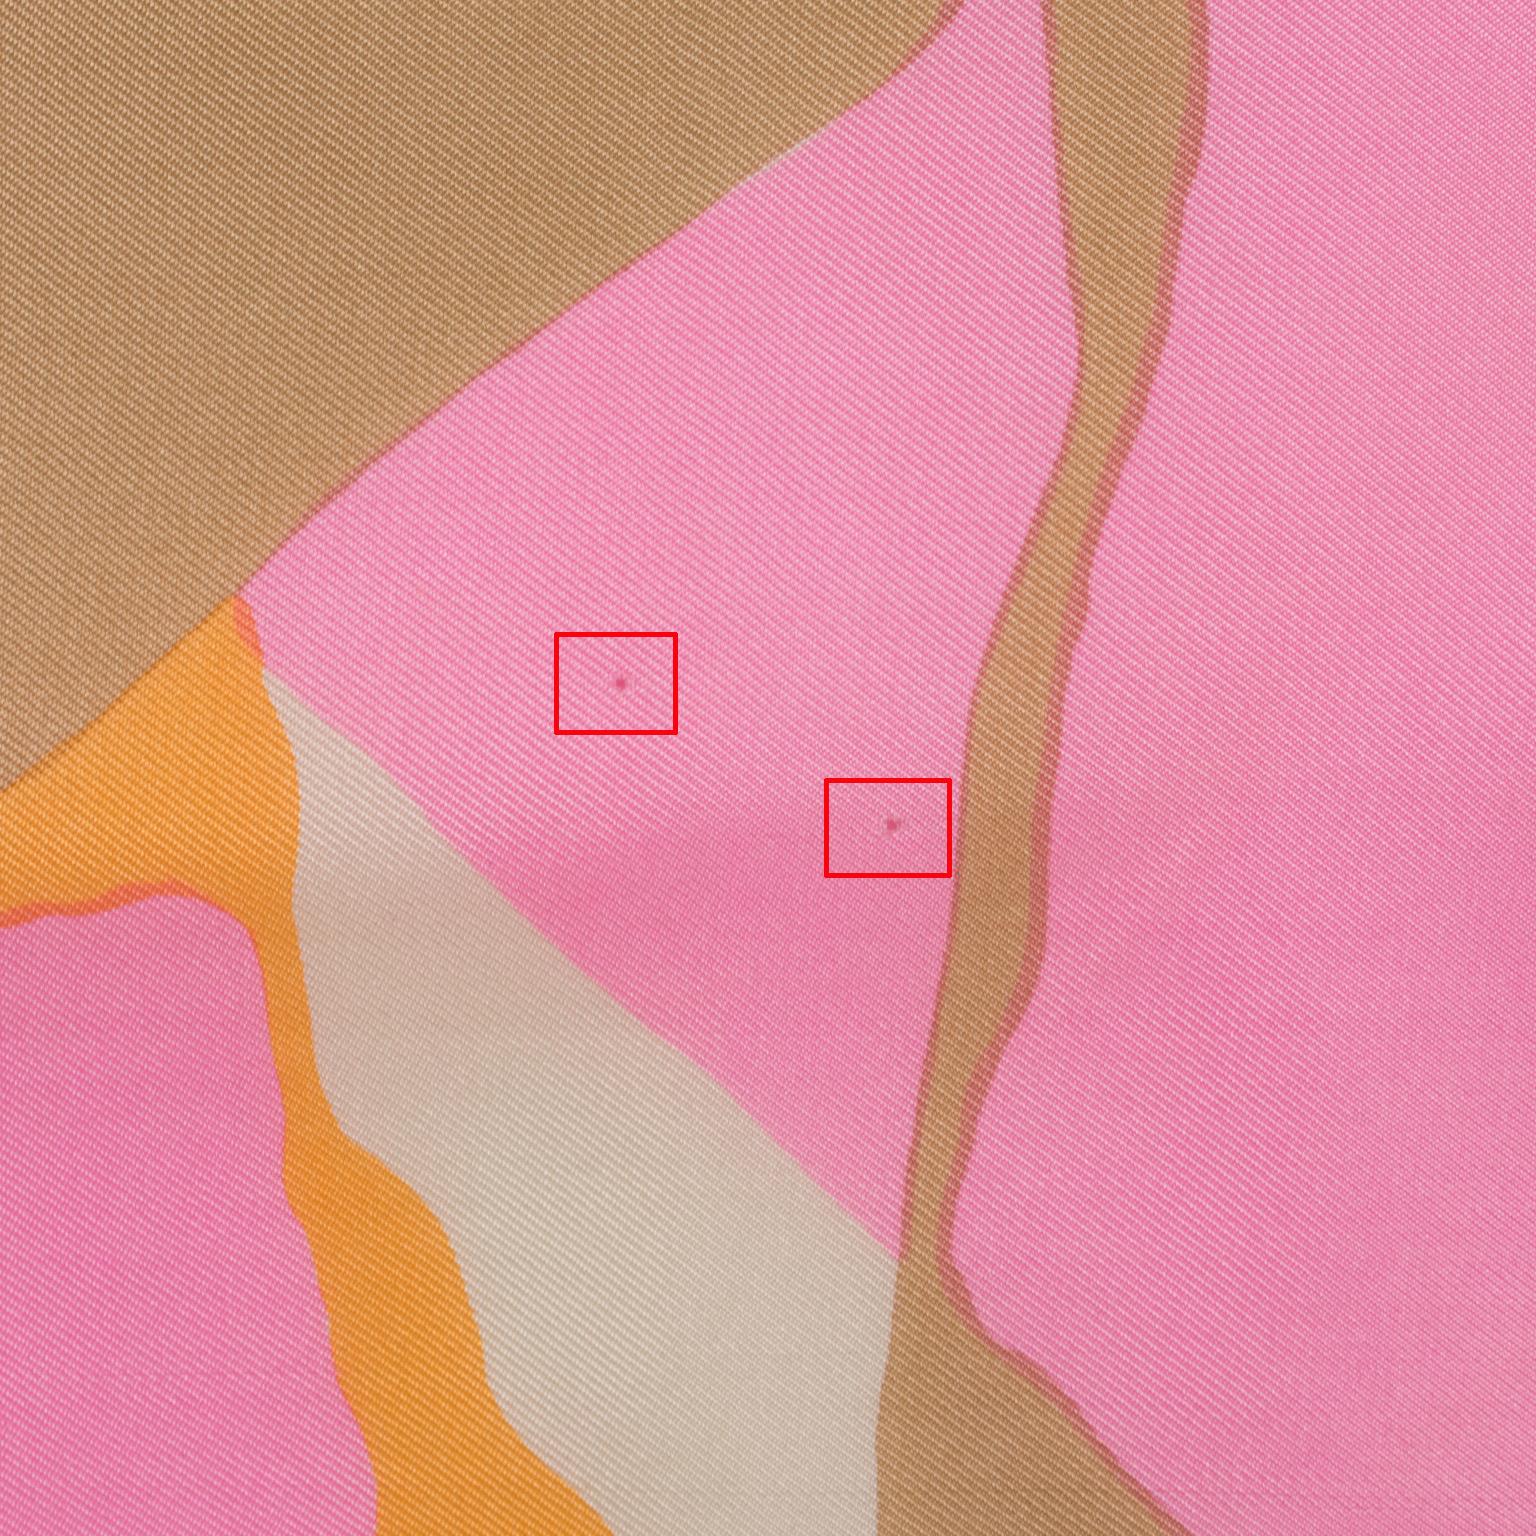 Nina Ricci Paris Silk Scarf Abstract 1970s Print in Pink and Orange 4